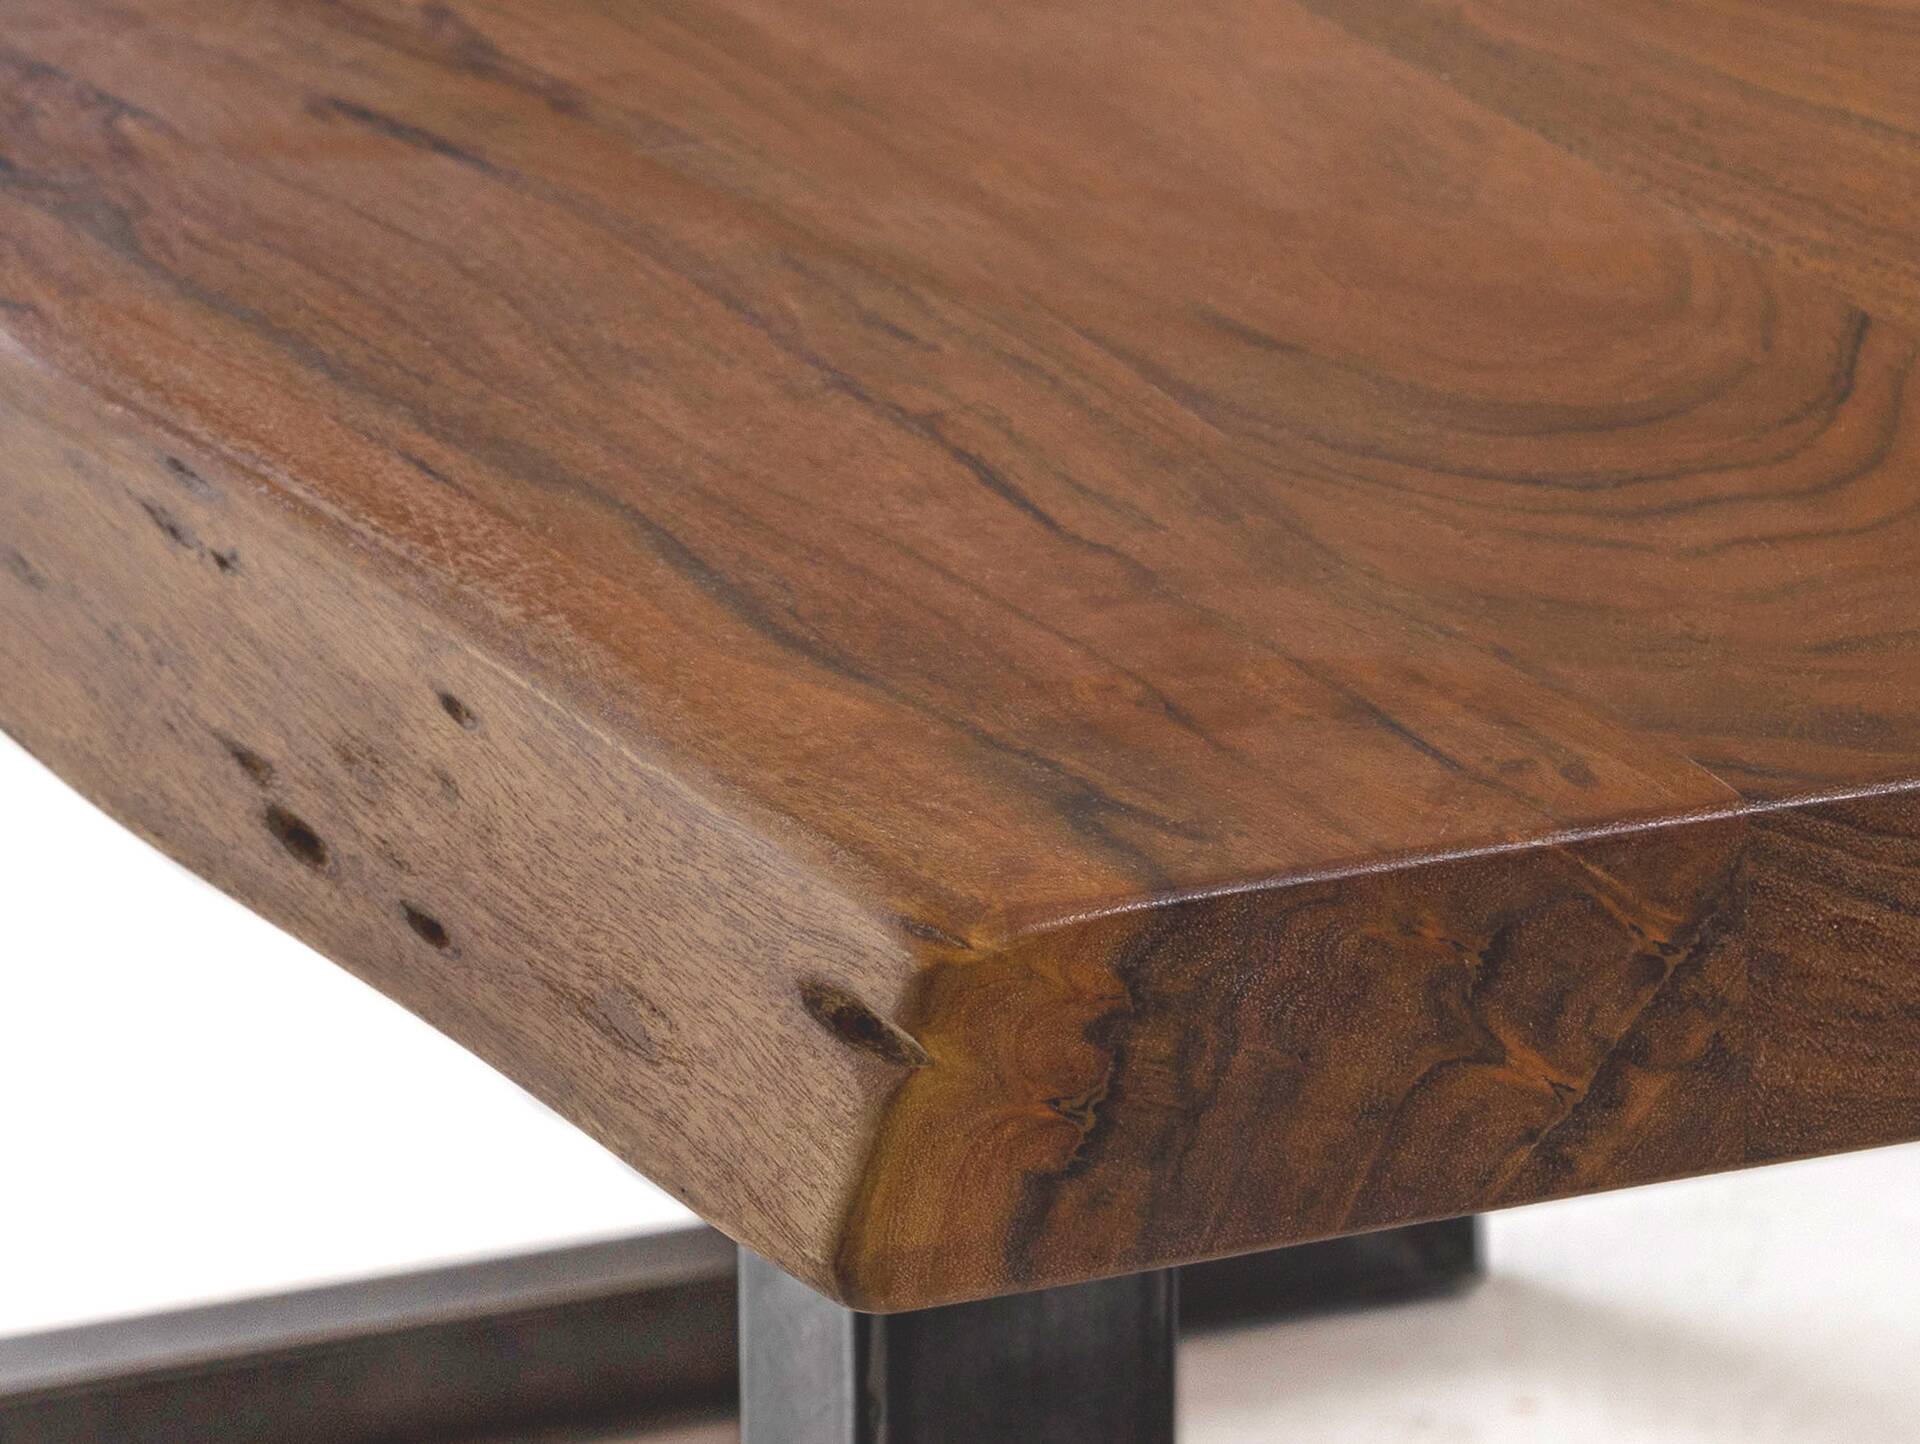 DALIN Baumkante Esstisch, Material Massivholz/Metall, Akazie lackiert 160 x 90 cm | alufarbig